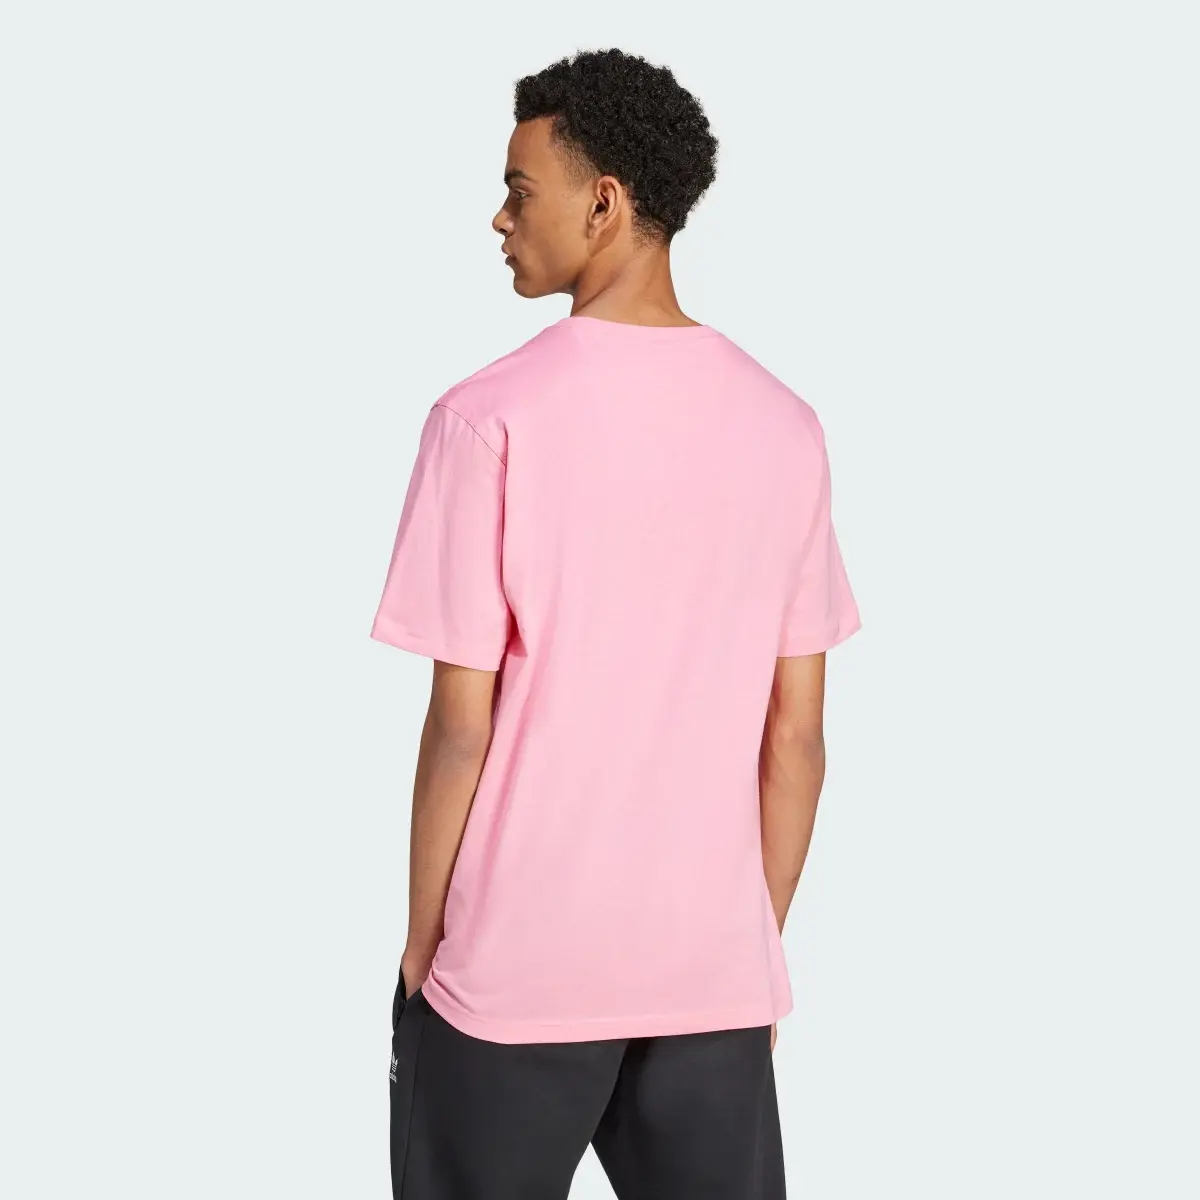 Adidas Pink T-Shirt. 3